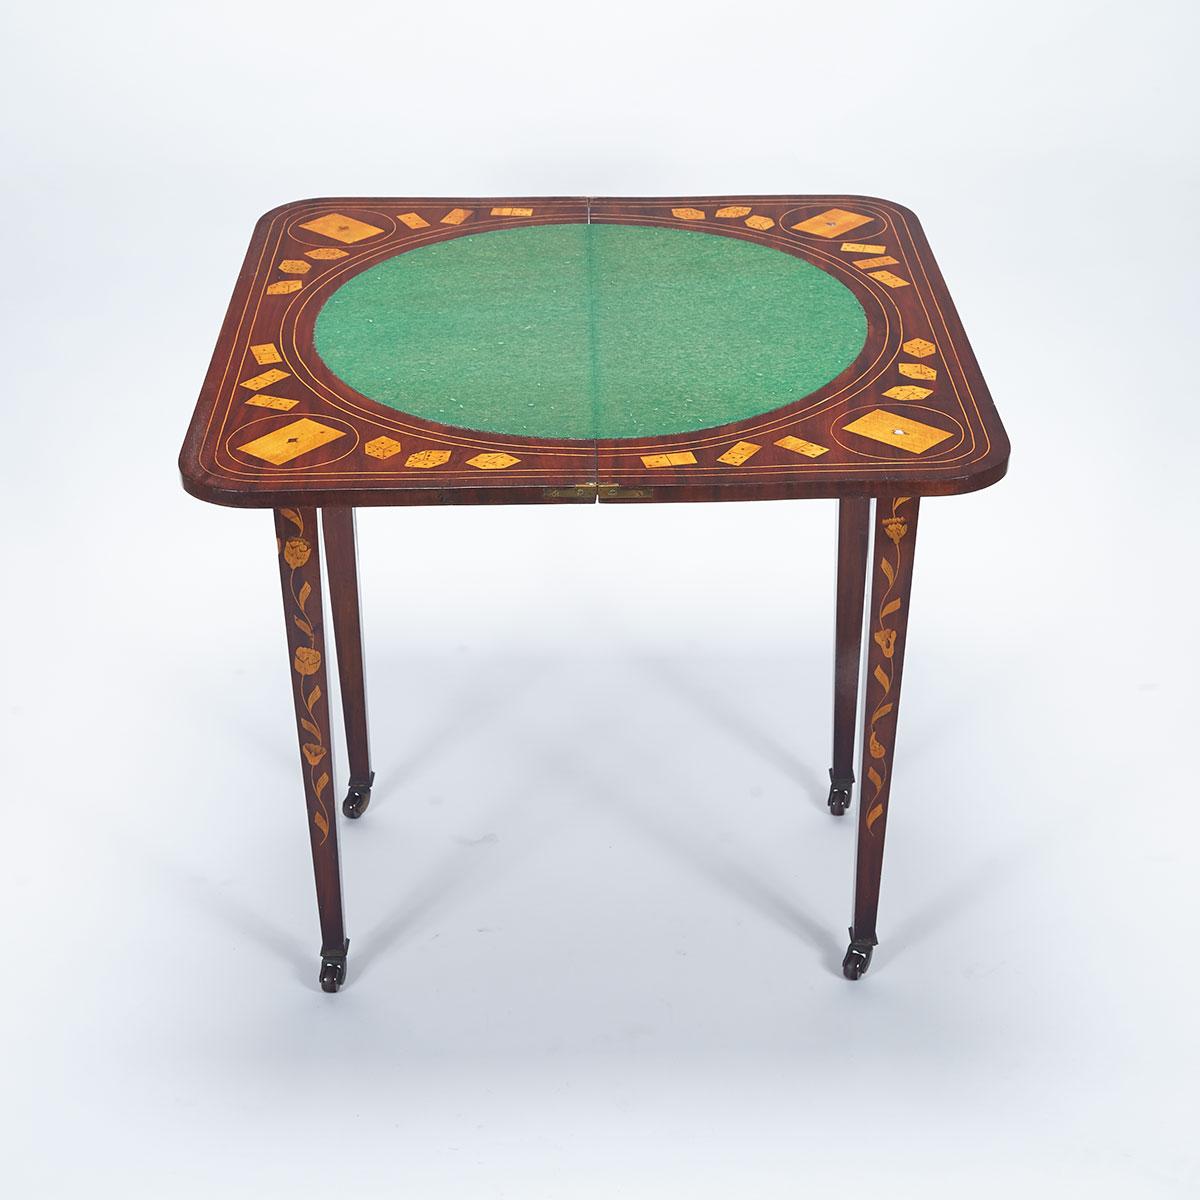 Dutch Walnut Marquetry Folding Games Table, early 19th century